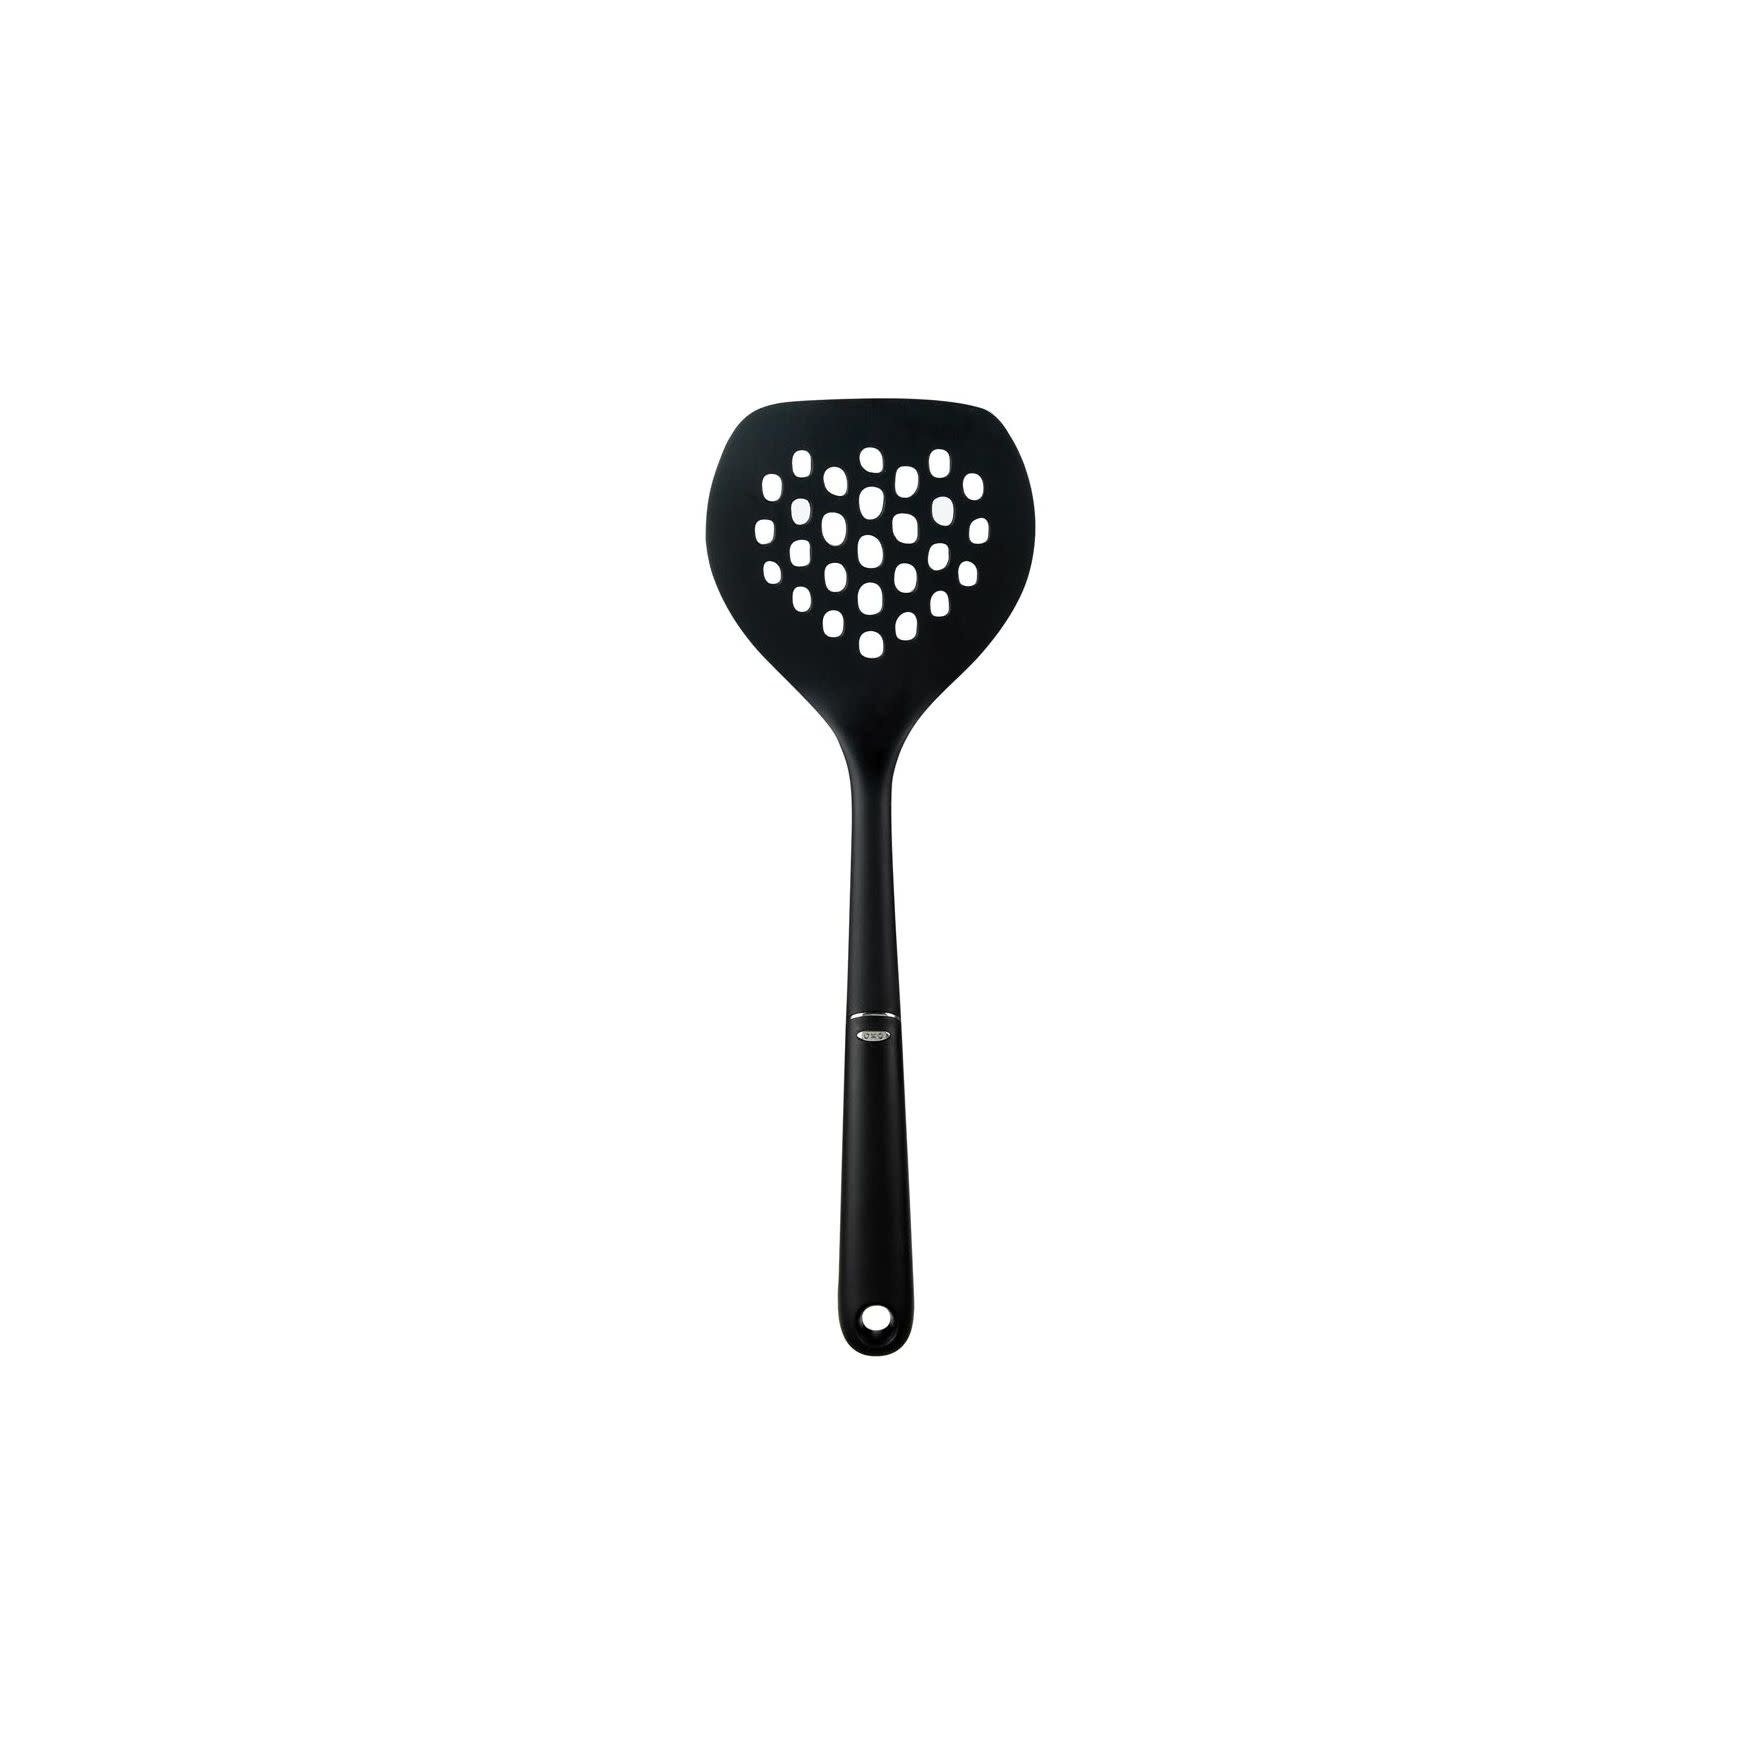 OXO Good Grips Nylon Spoon - Spoons N Spice